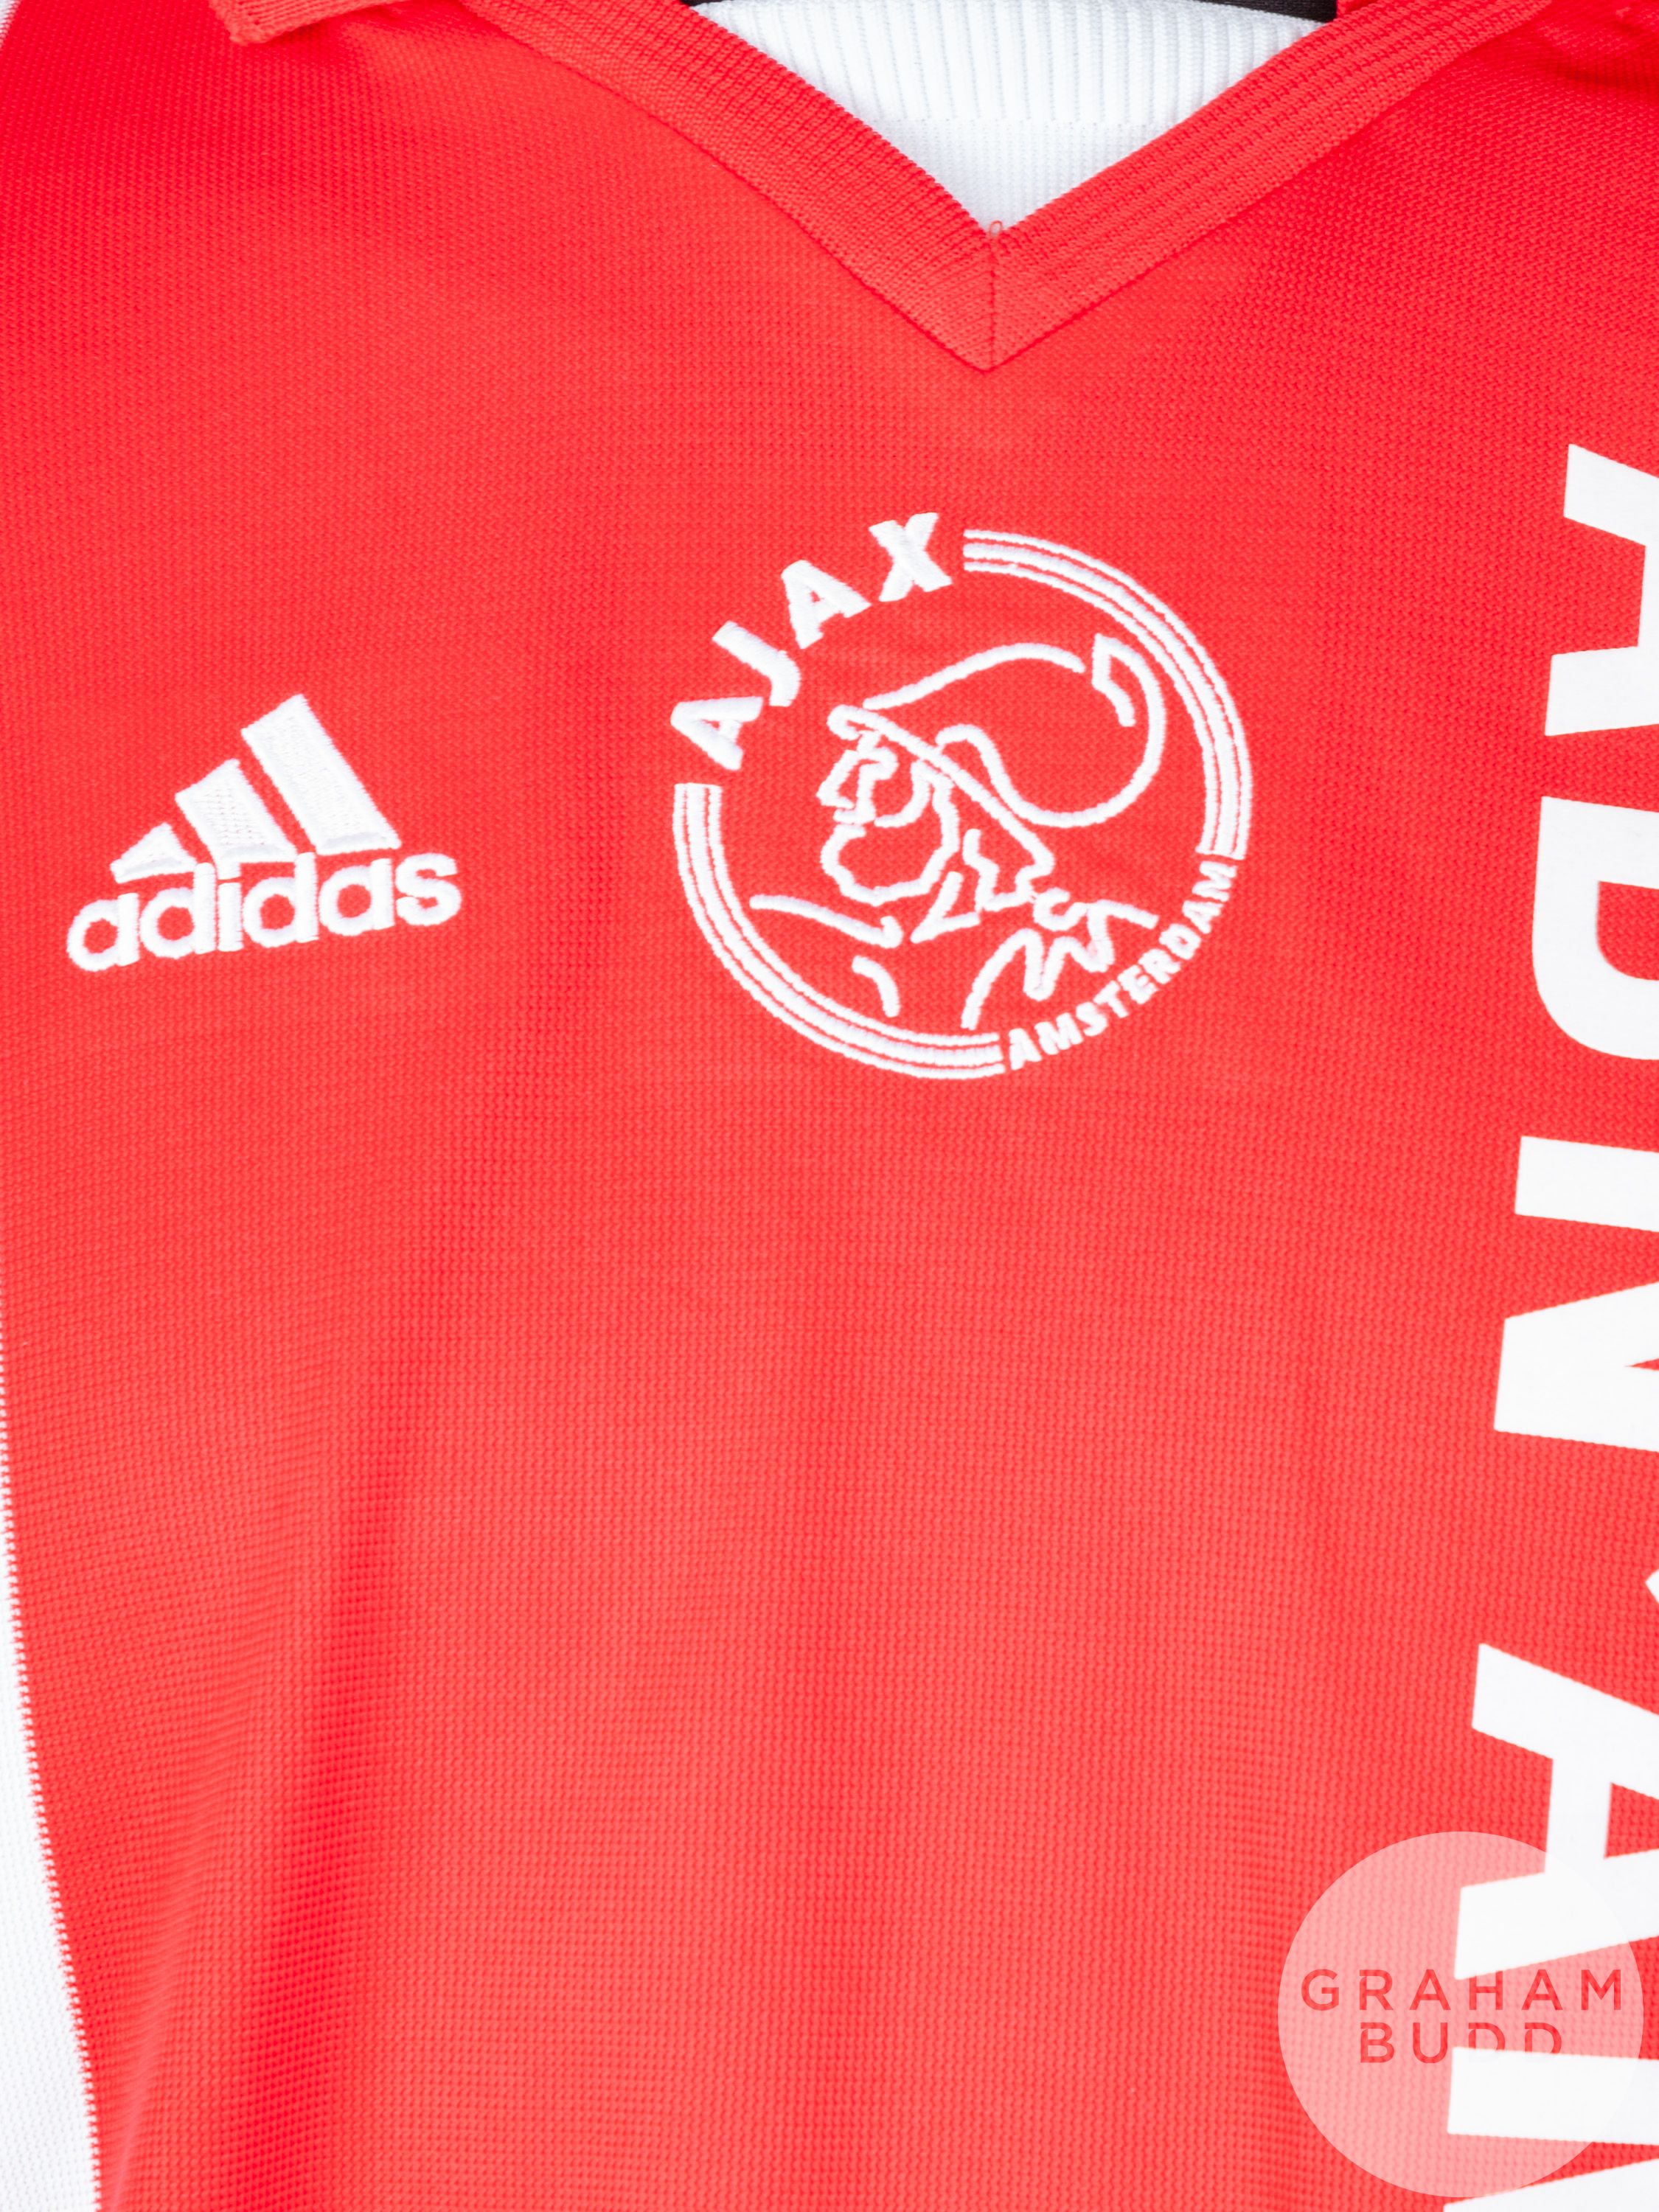 Shota Arveladze red and white No.14 Ajax short-sleeved shirt, 2001-02 - Image 3 of 6